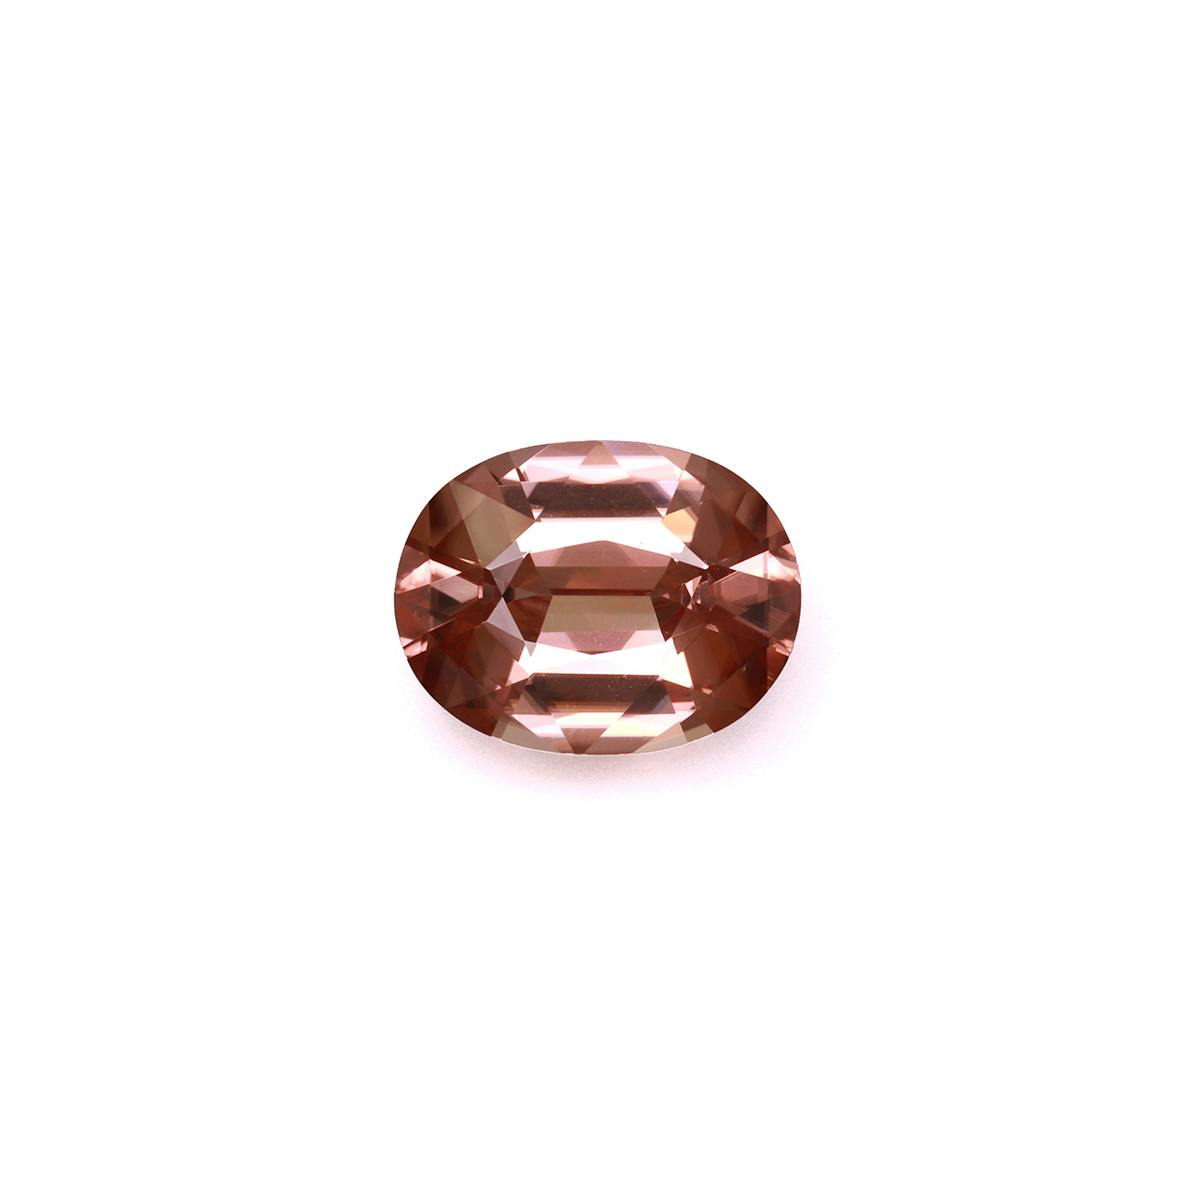 13.10 Ct Natural Cambodia Pink Zircon Emerald Shape Loose Gemstone